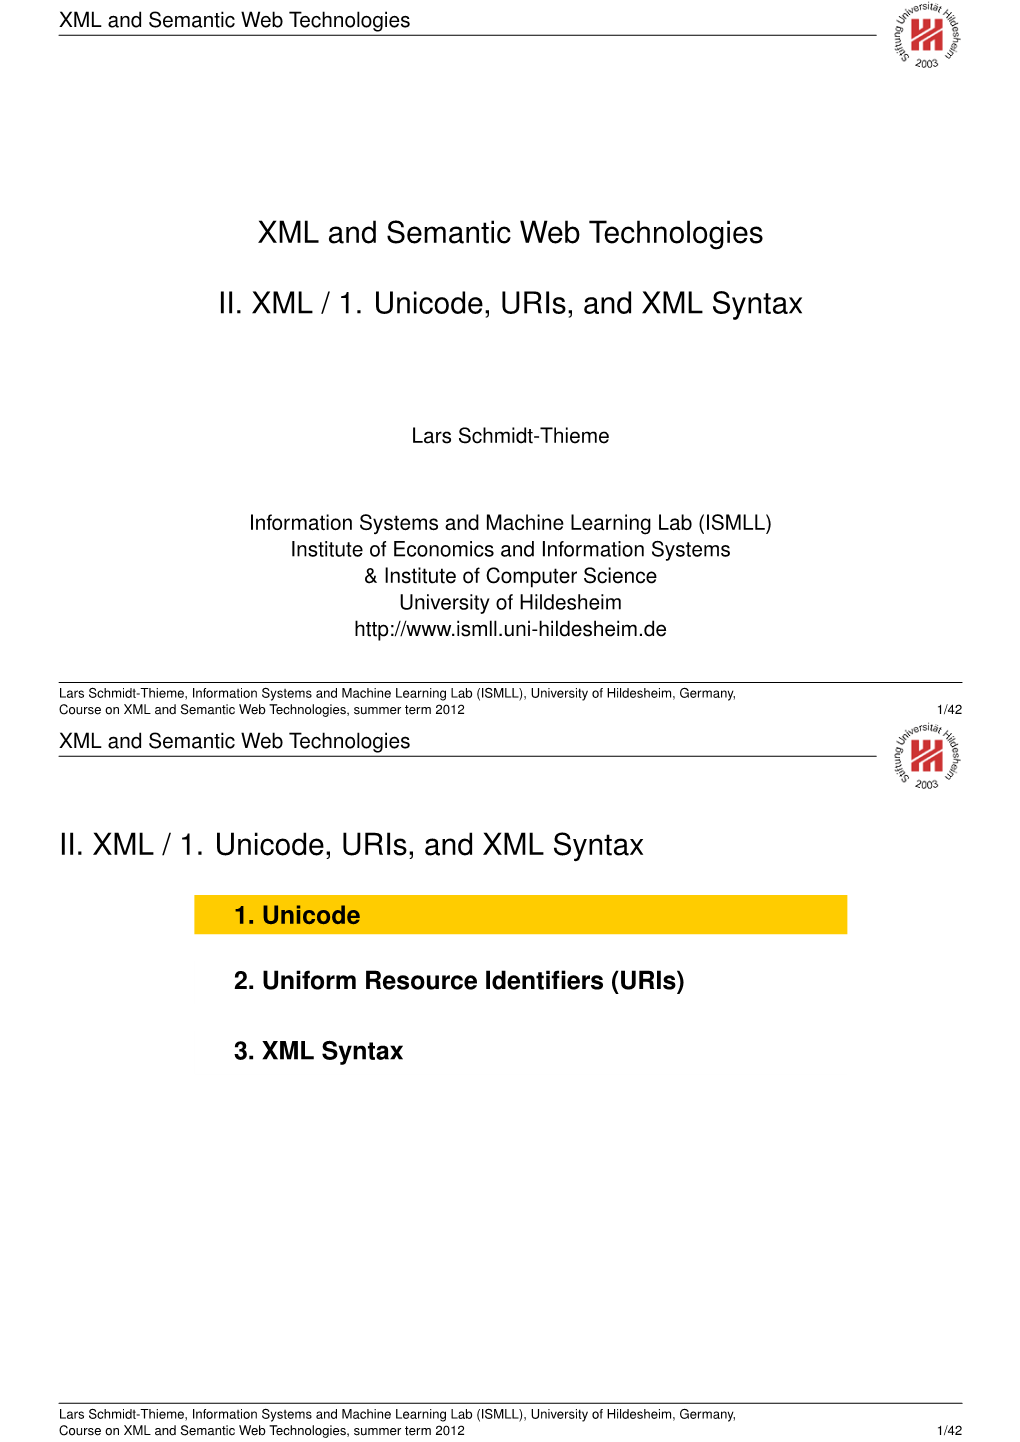 XML and Semantic Web Technologies II. XML / 1. Unicode, Uris, And